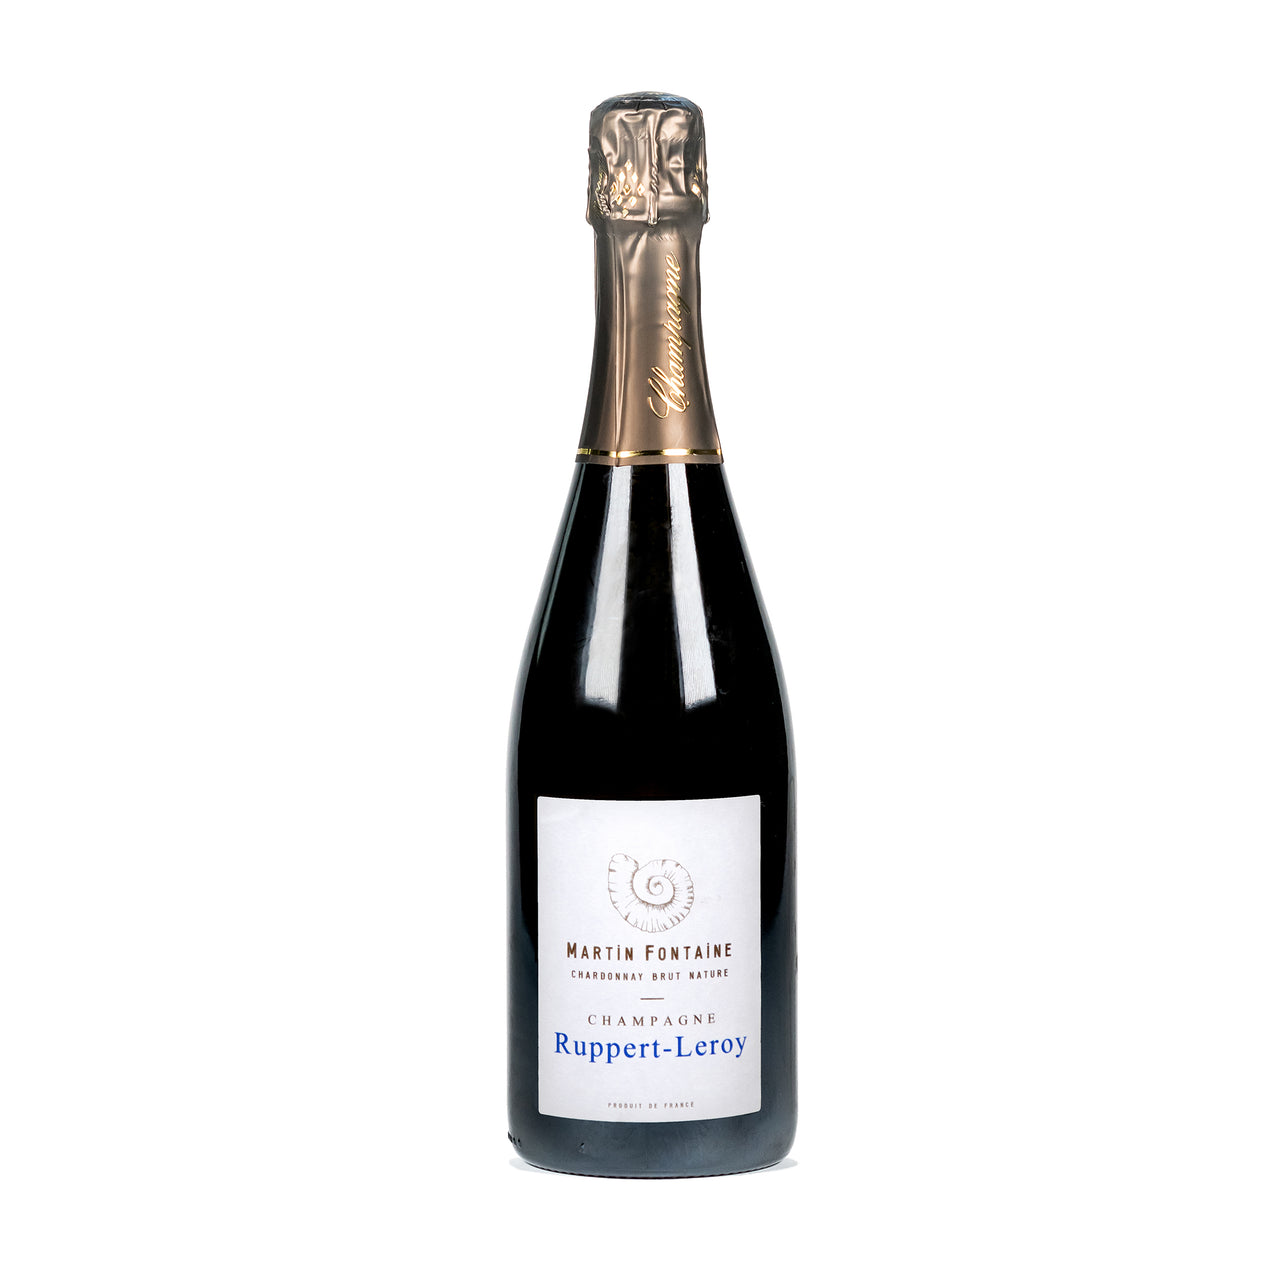 Premier Cru 2014 by fatcork | Redon Millésime Champagne | Pascal Brut